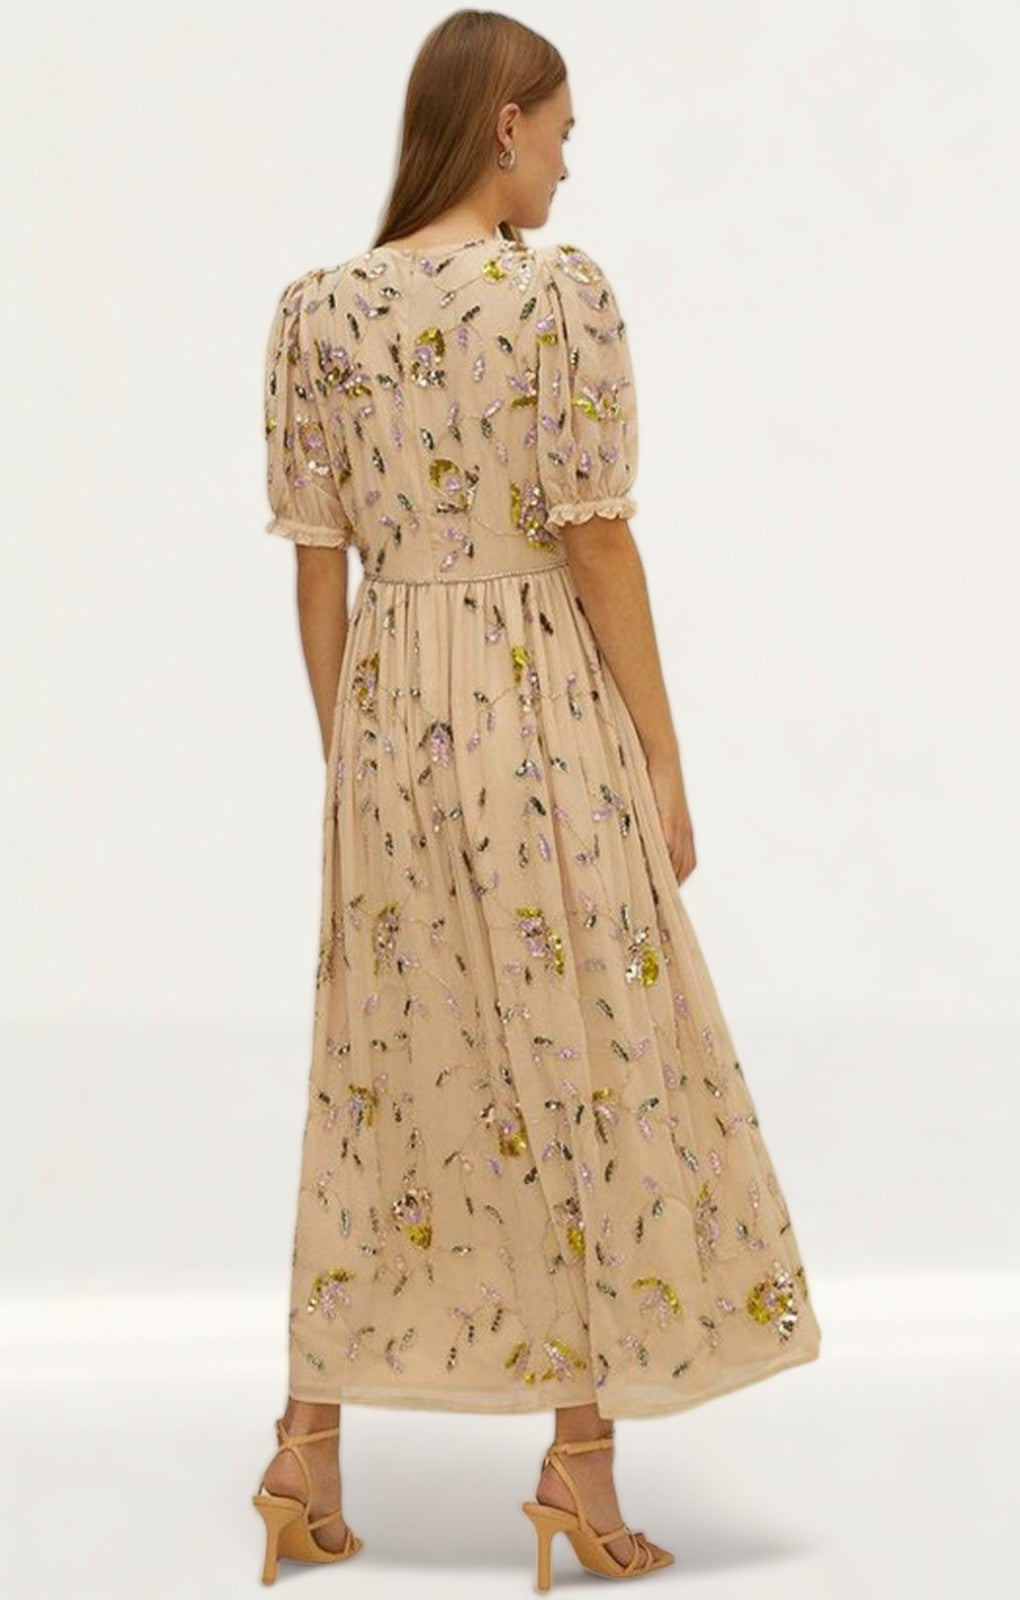 Oasis Embellished Pretty Floral V Neck Maxi Dress product image